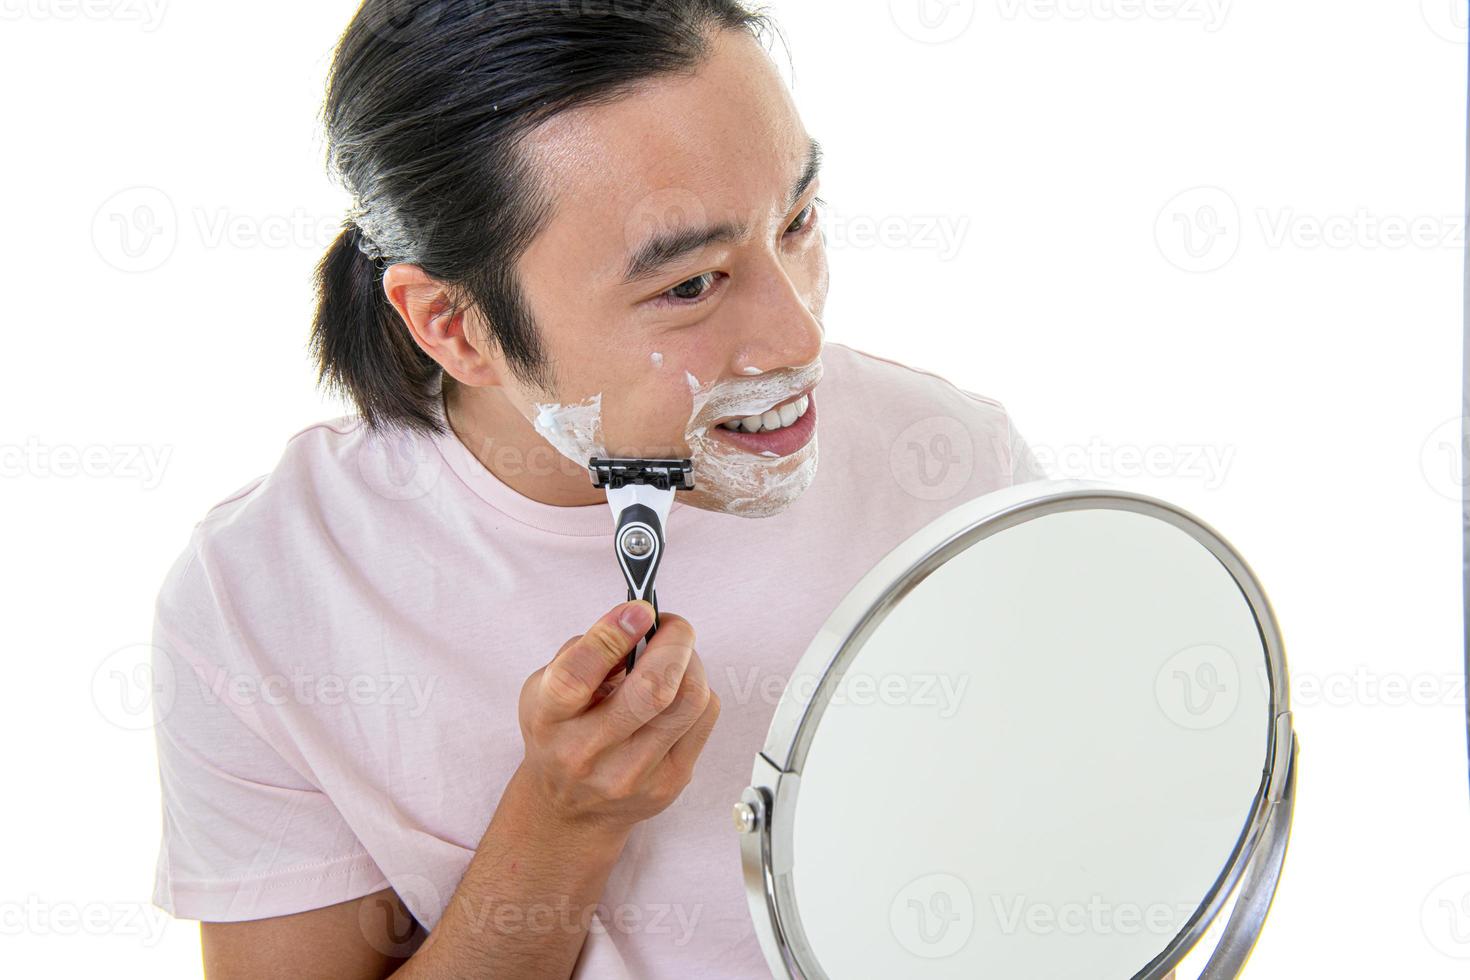 chico serio afeitándose la barba foto